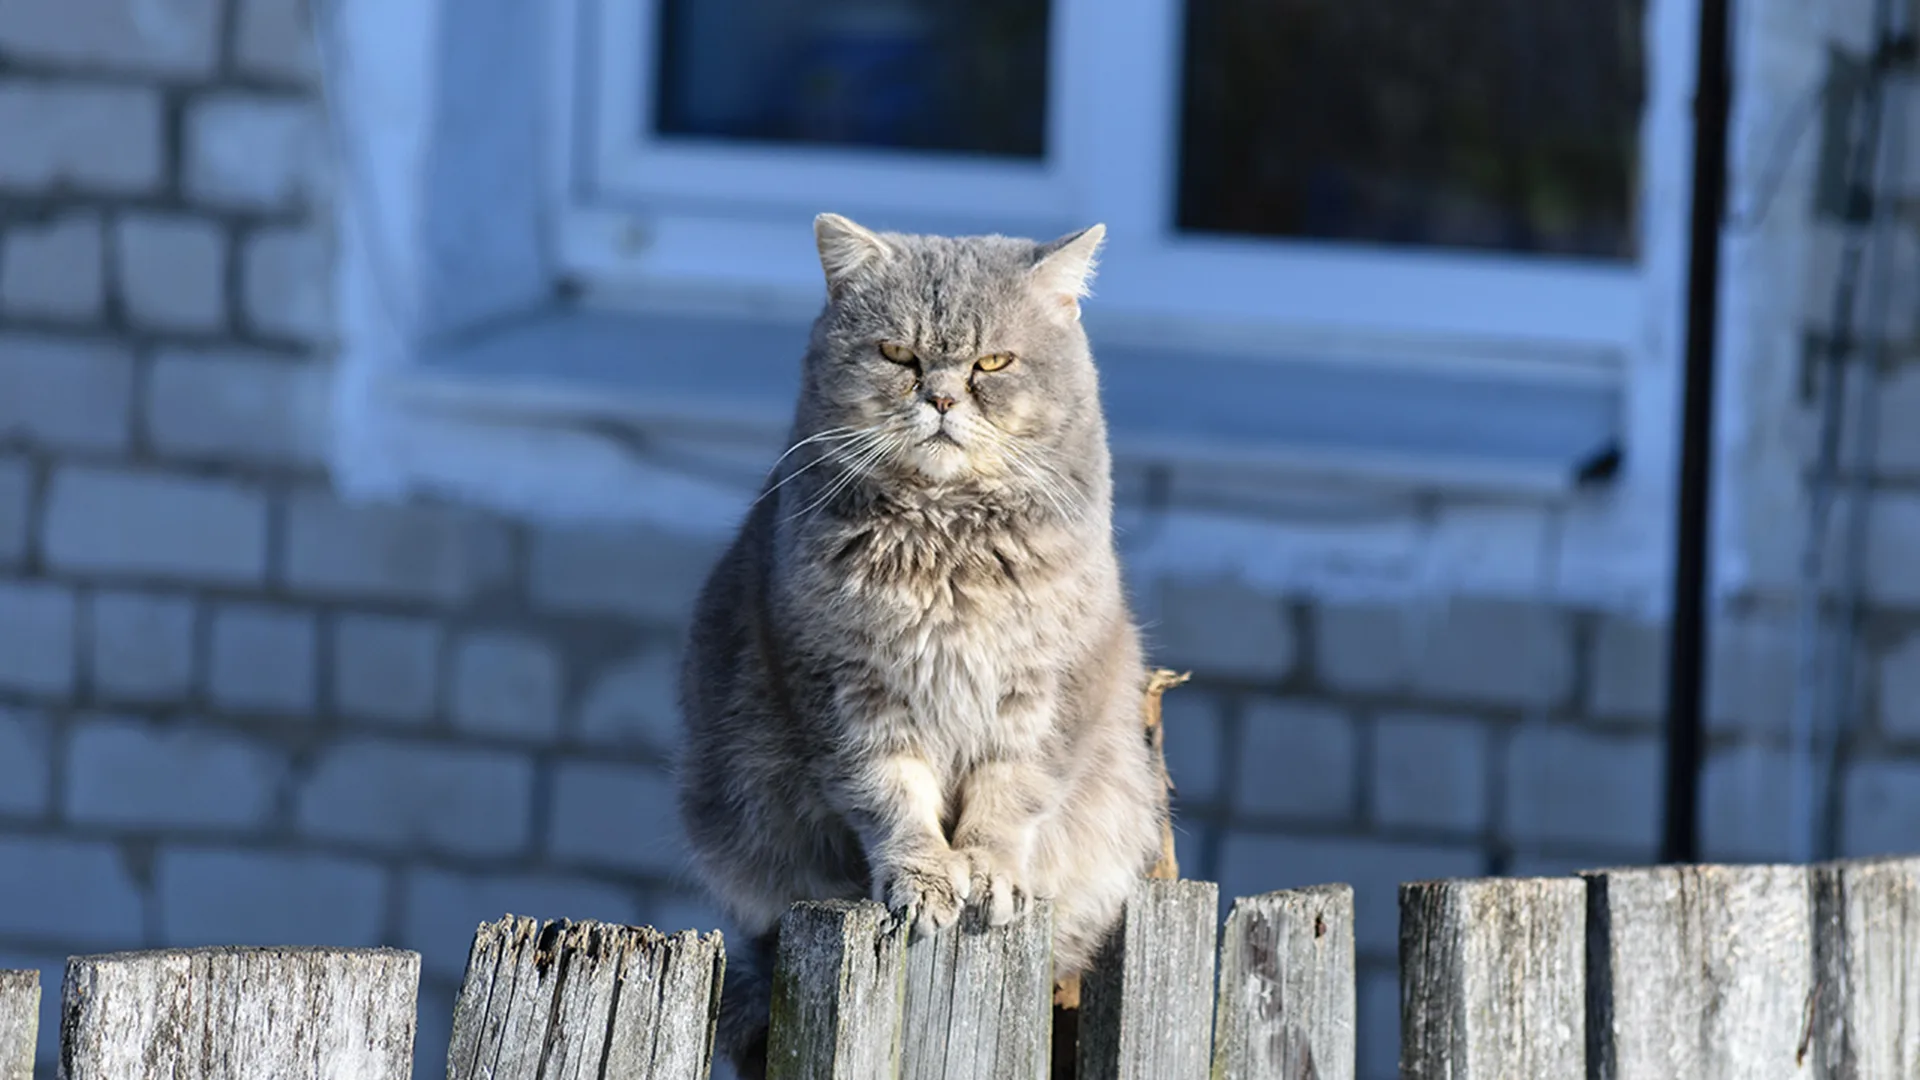 Grumpy cat staring at camera sat on a fence